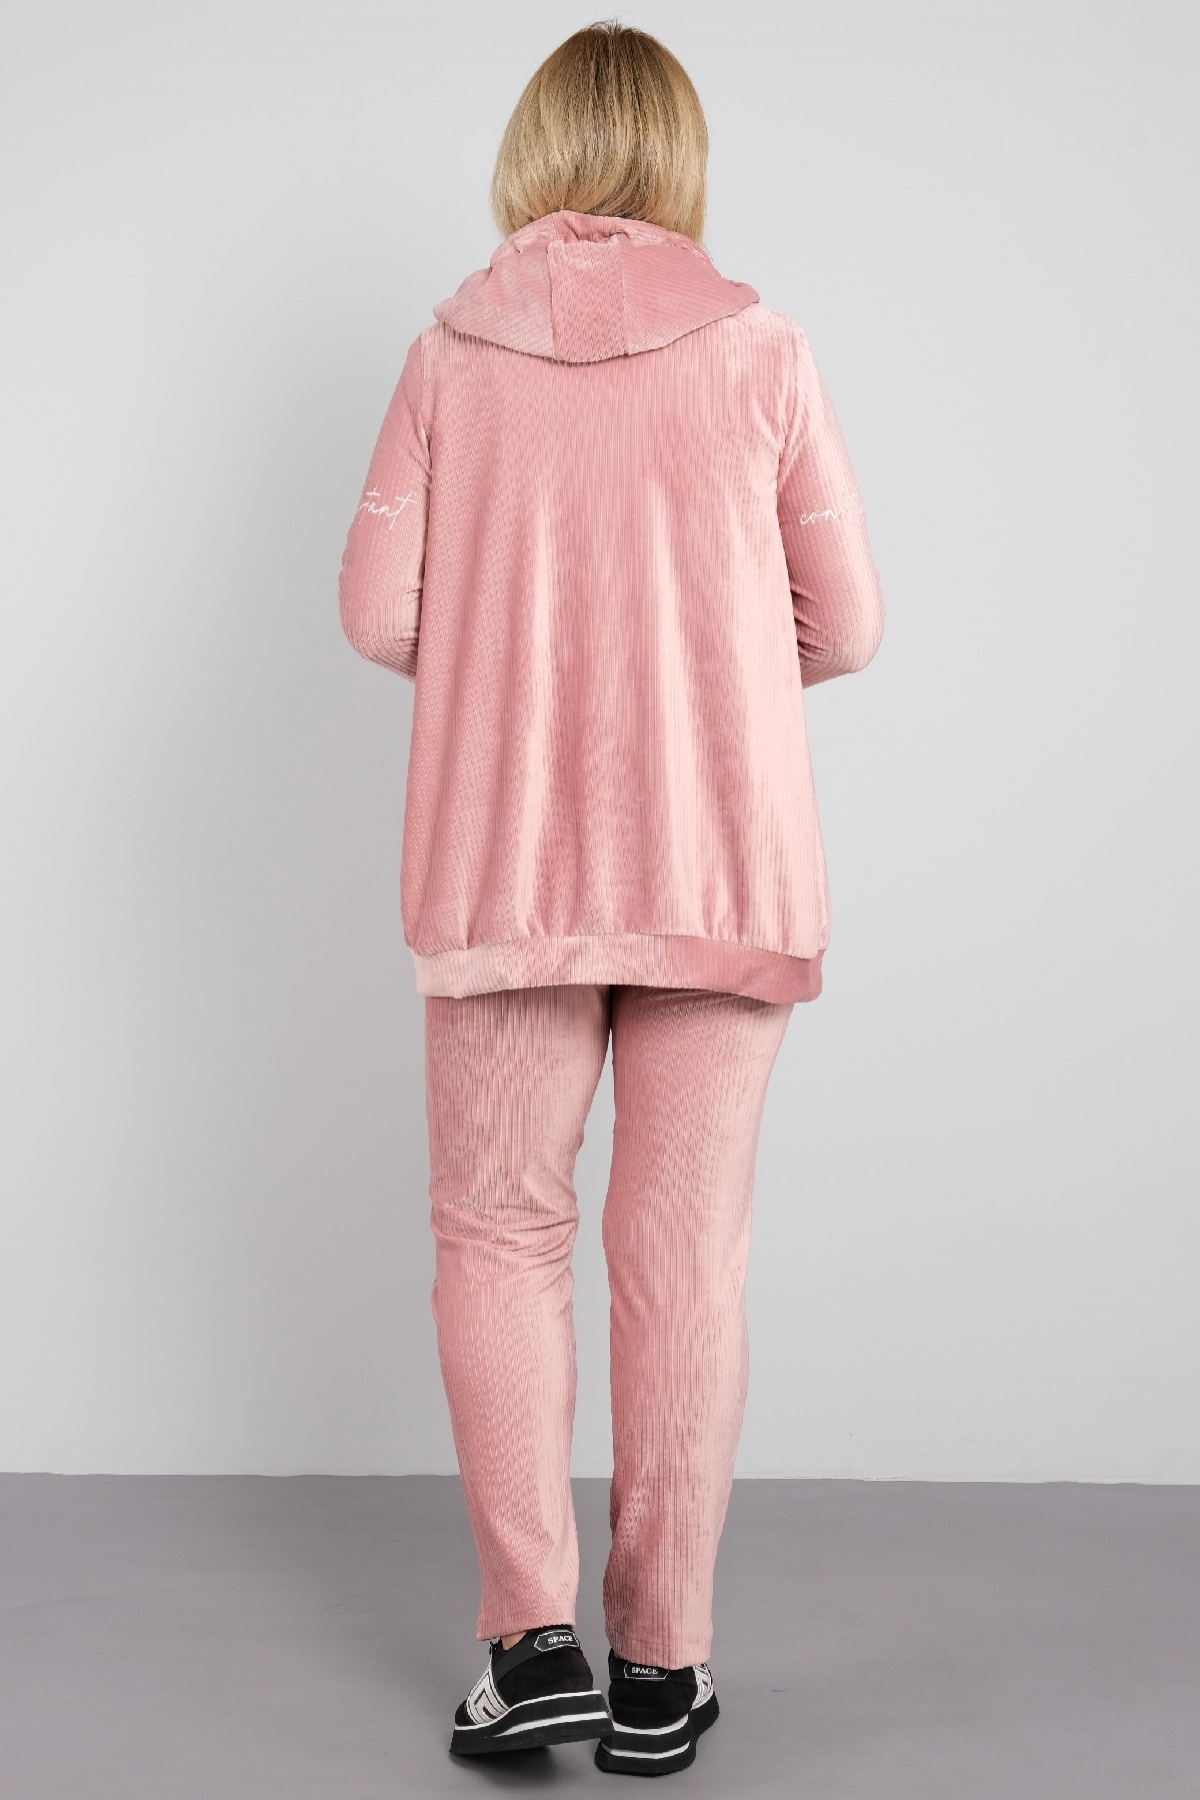 Women's 3 Piece Suits-powder pink